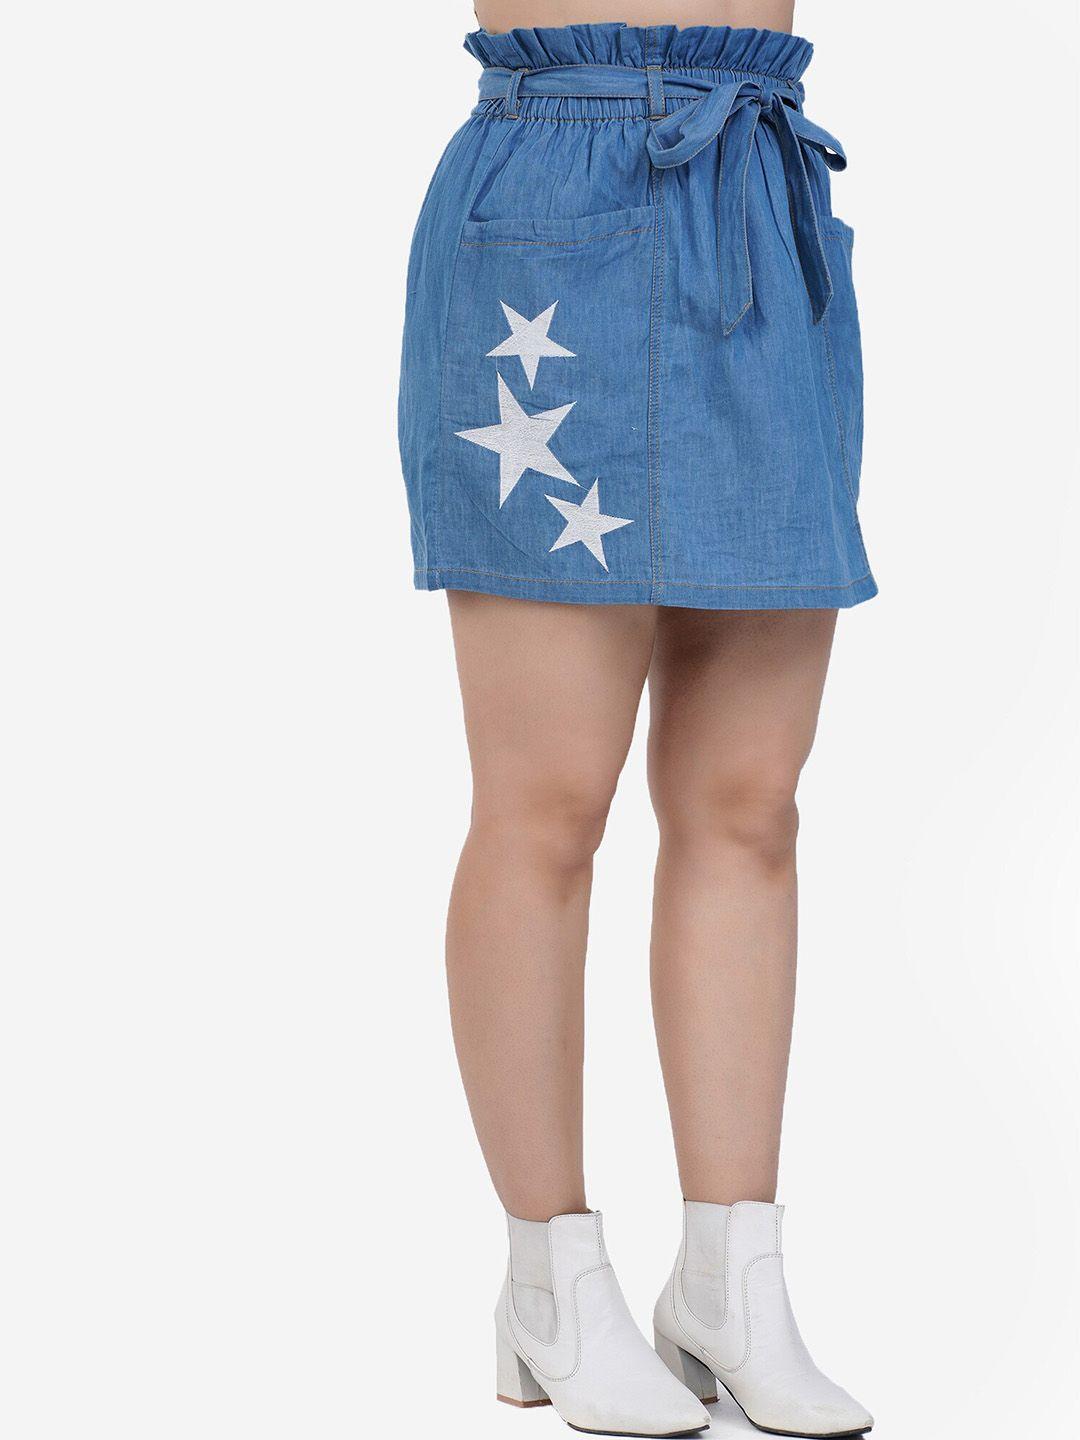 sumavi-fashion star printed detail denim indigo a-line mini skirt